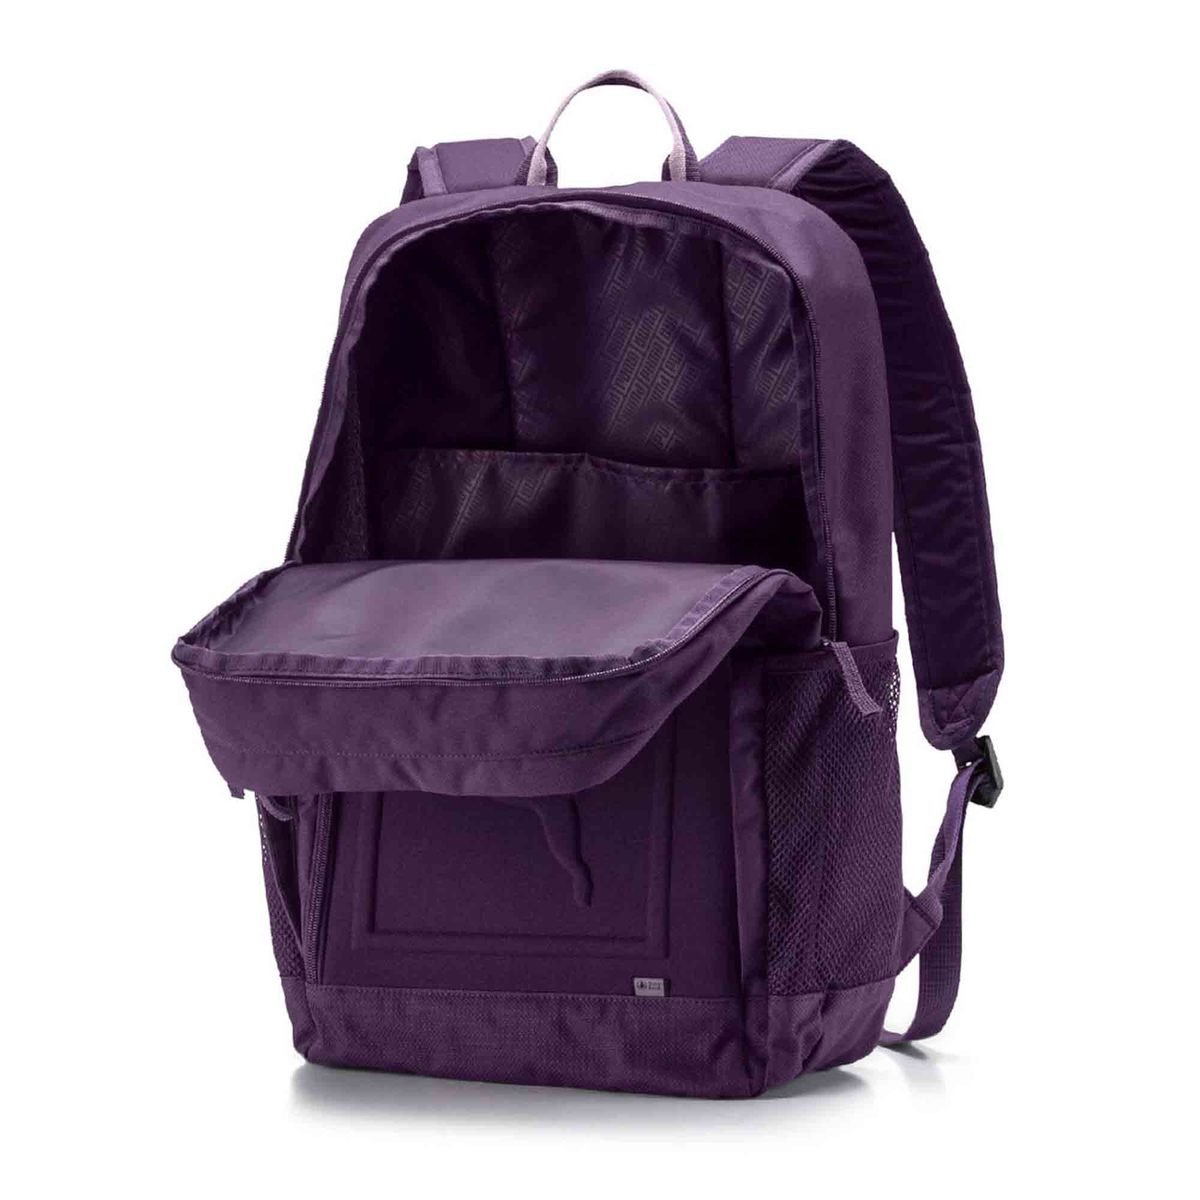 PUMA S Backpack Indigo 07558107